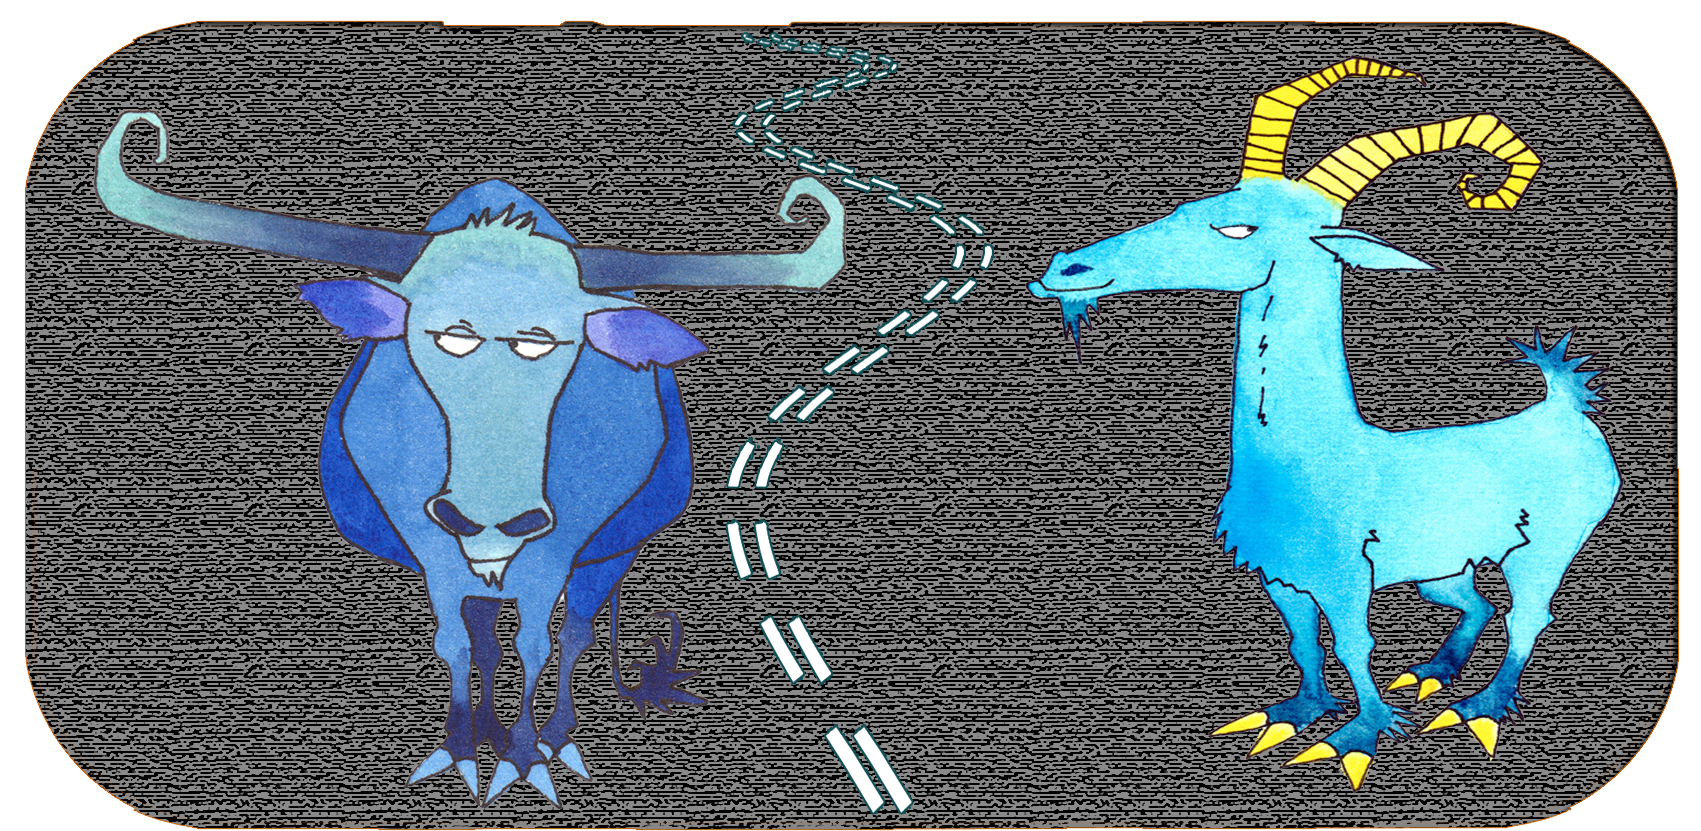 Chinese zodiac animals | 6 years apart | The Ox